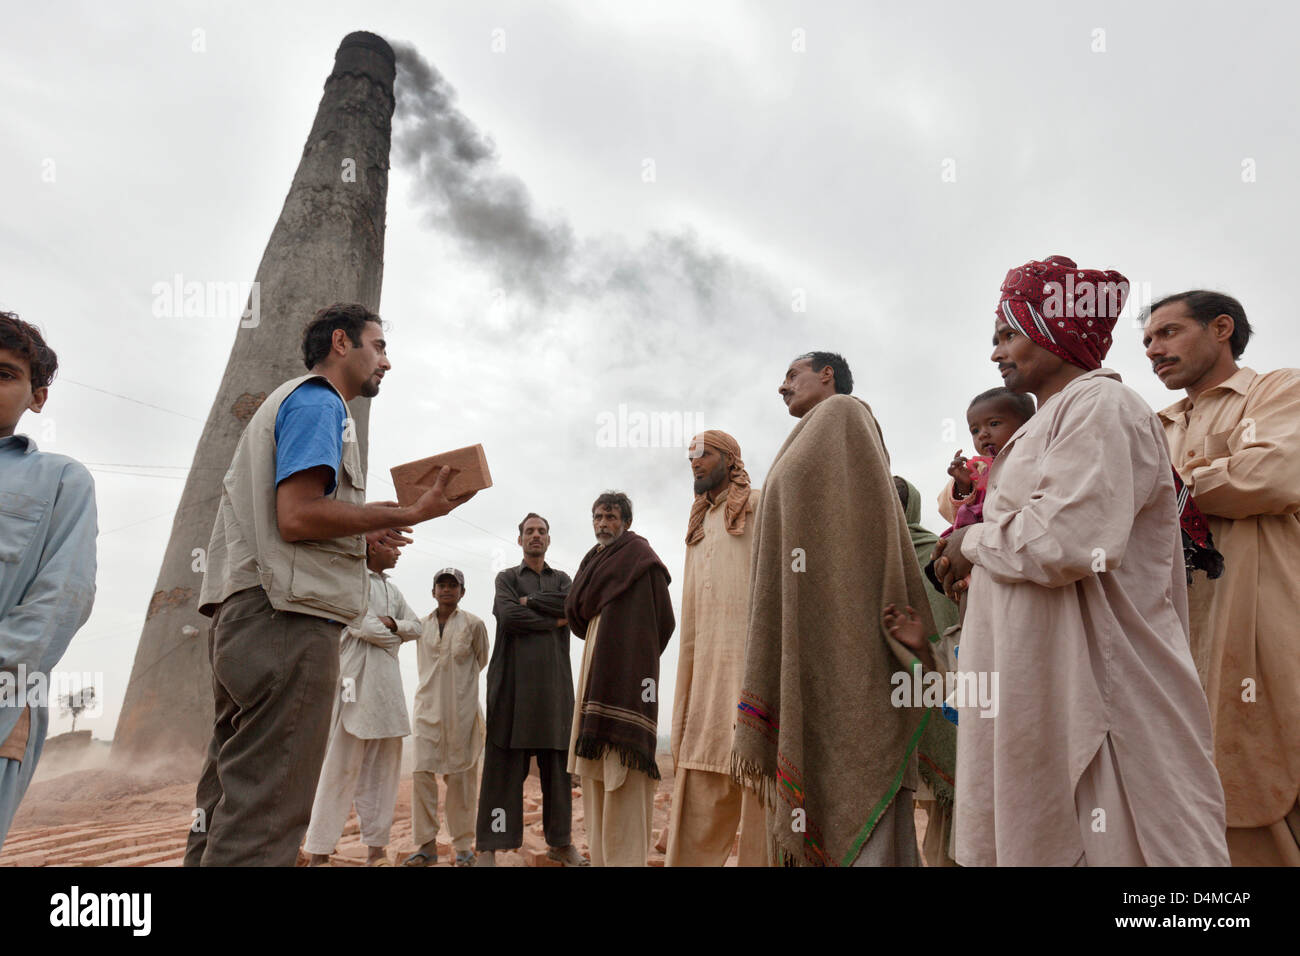 Islamabad, Pakistan, negotiations before a brick kiln Stock Photo